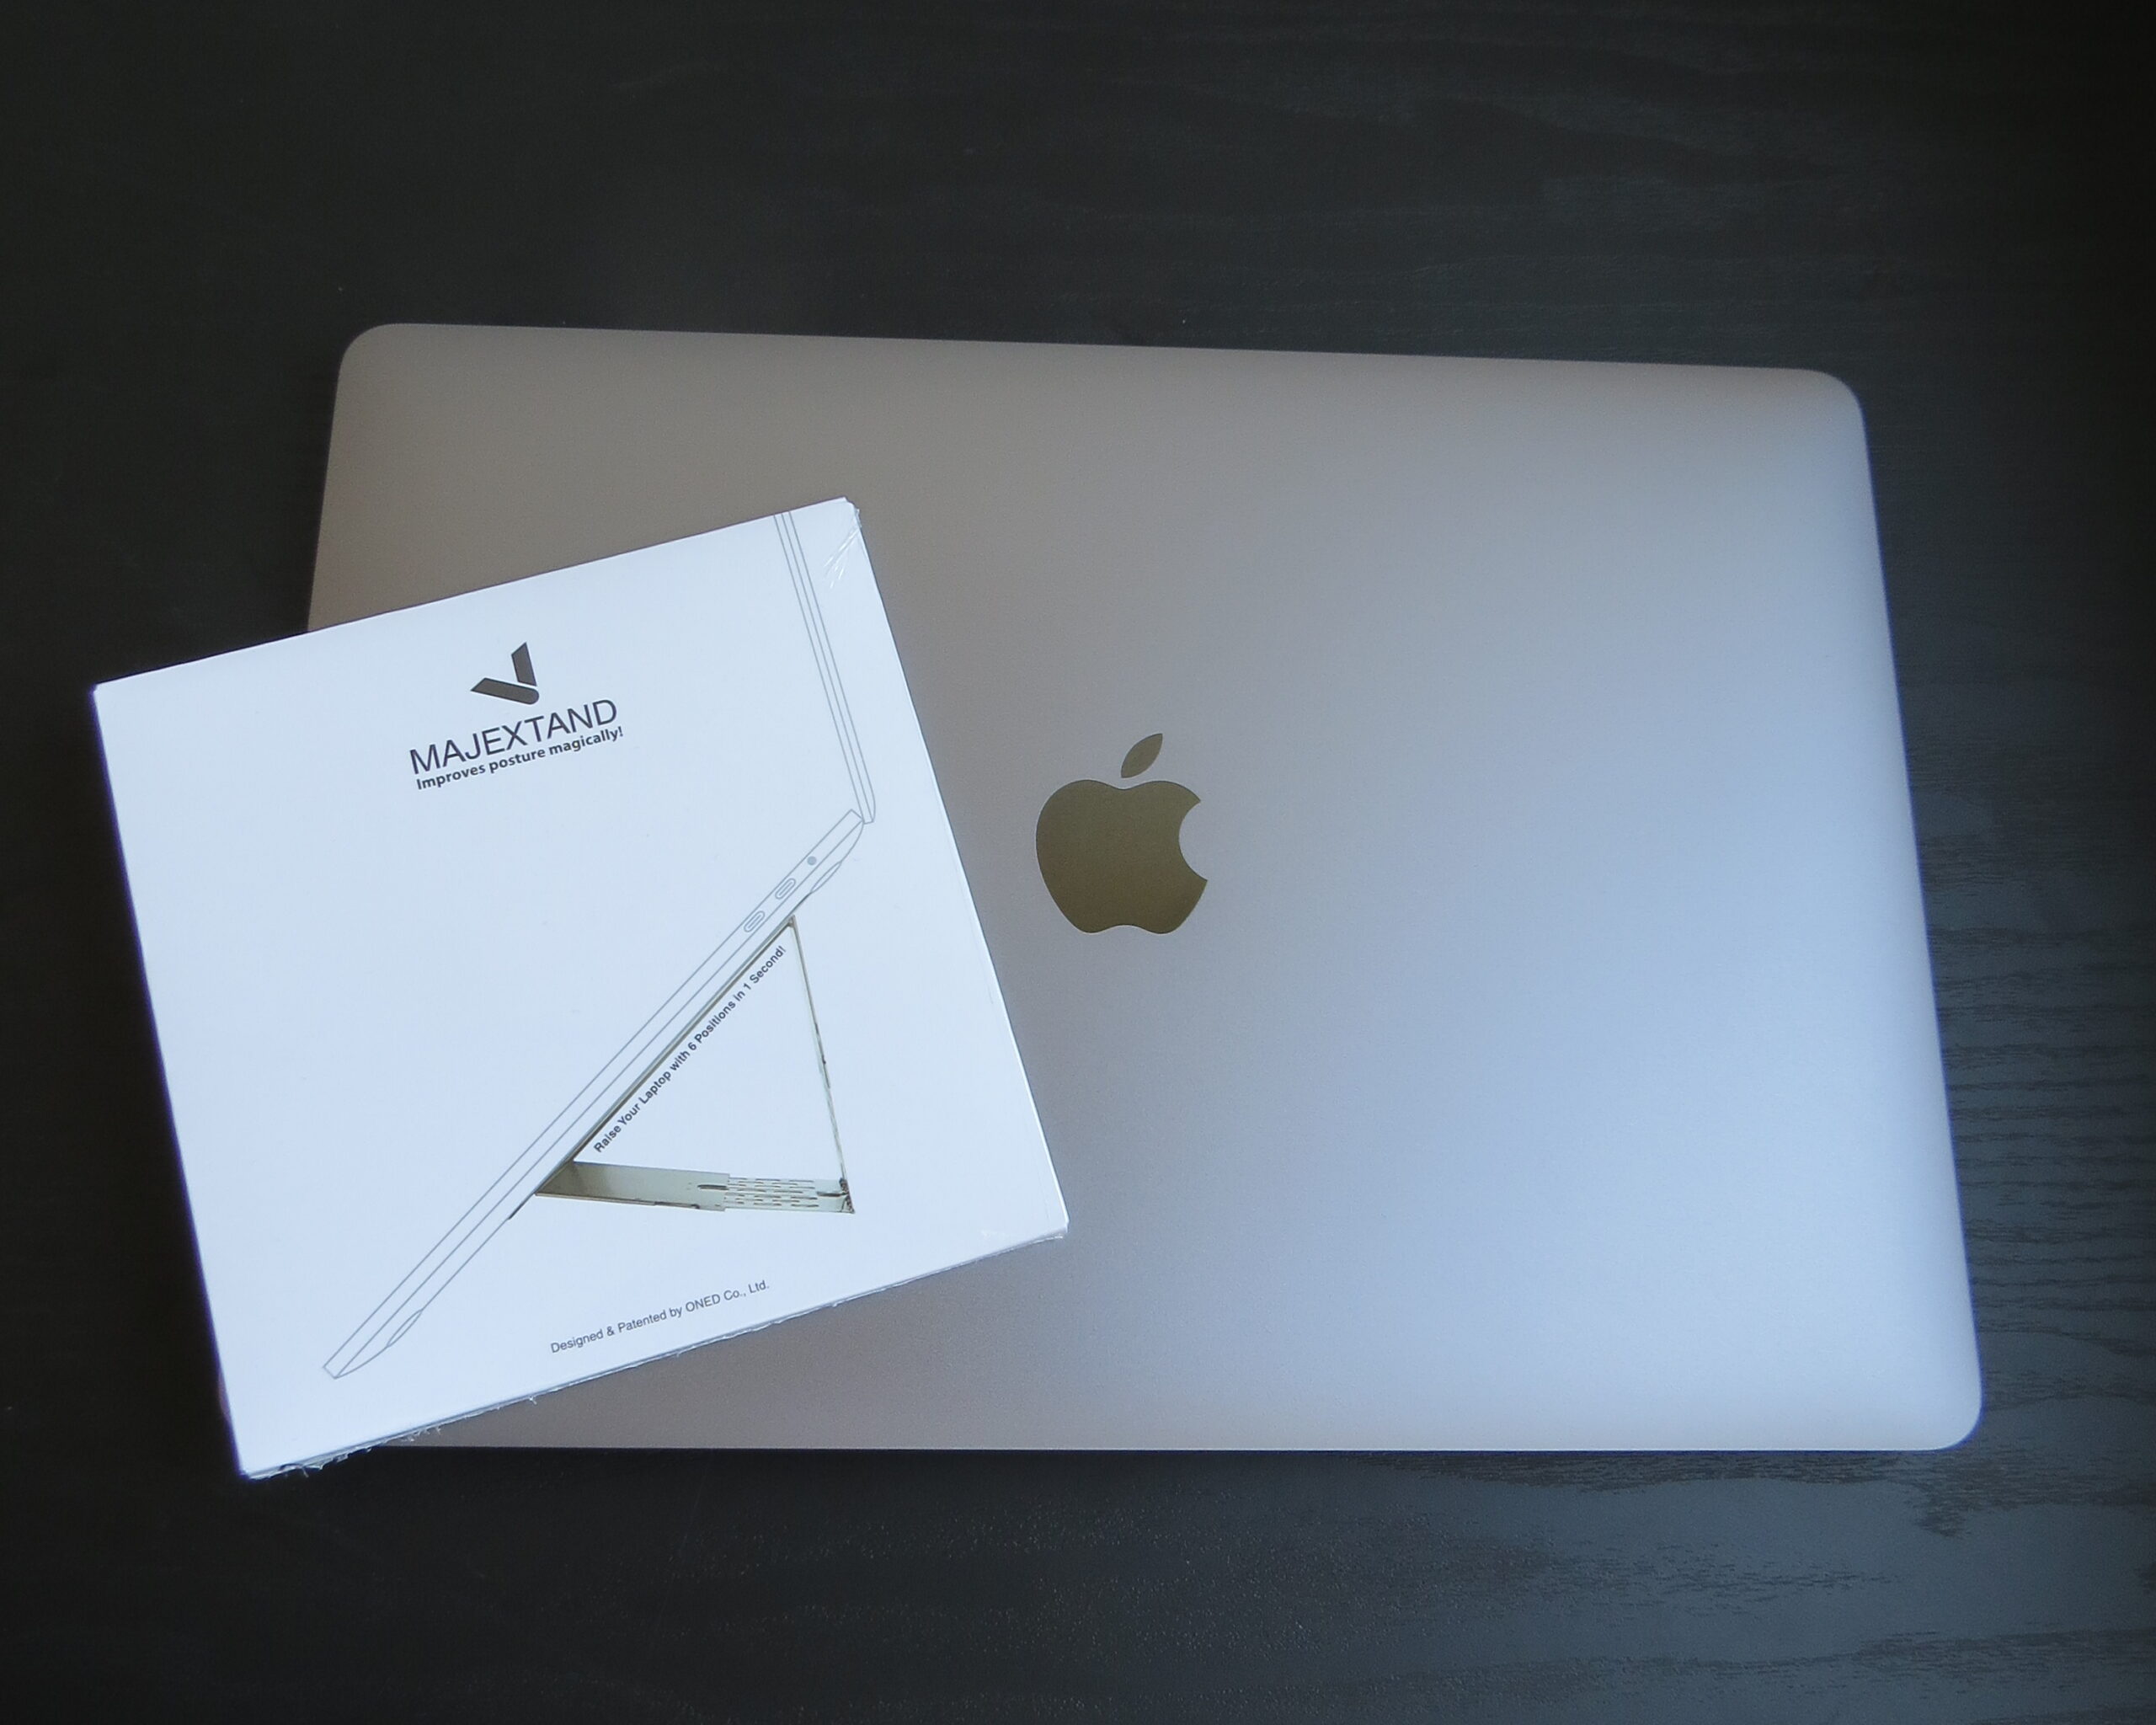 MacBook AirとMajextand